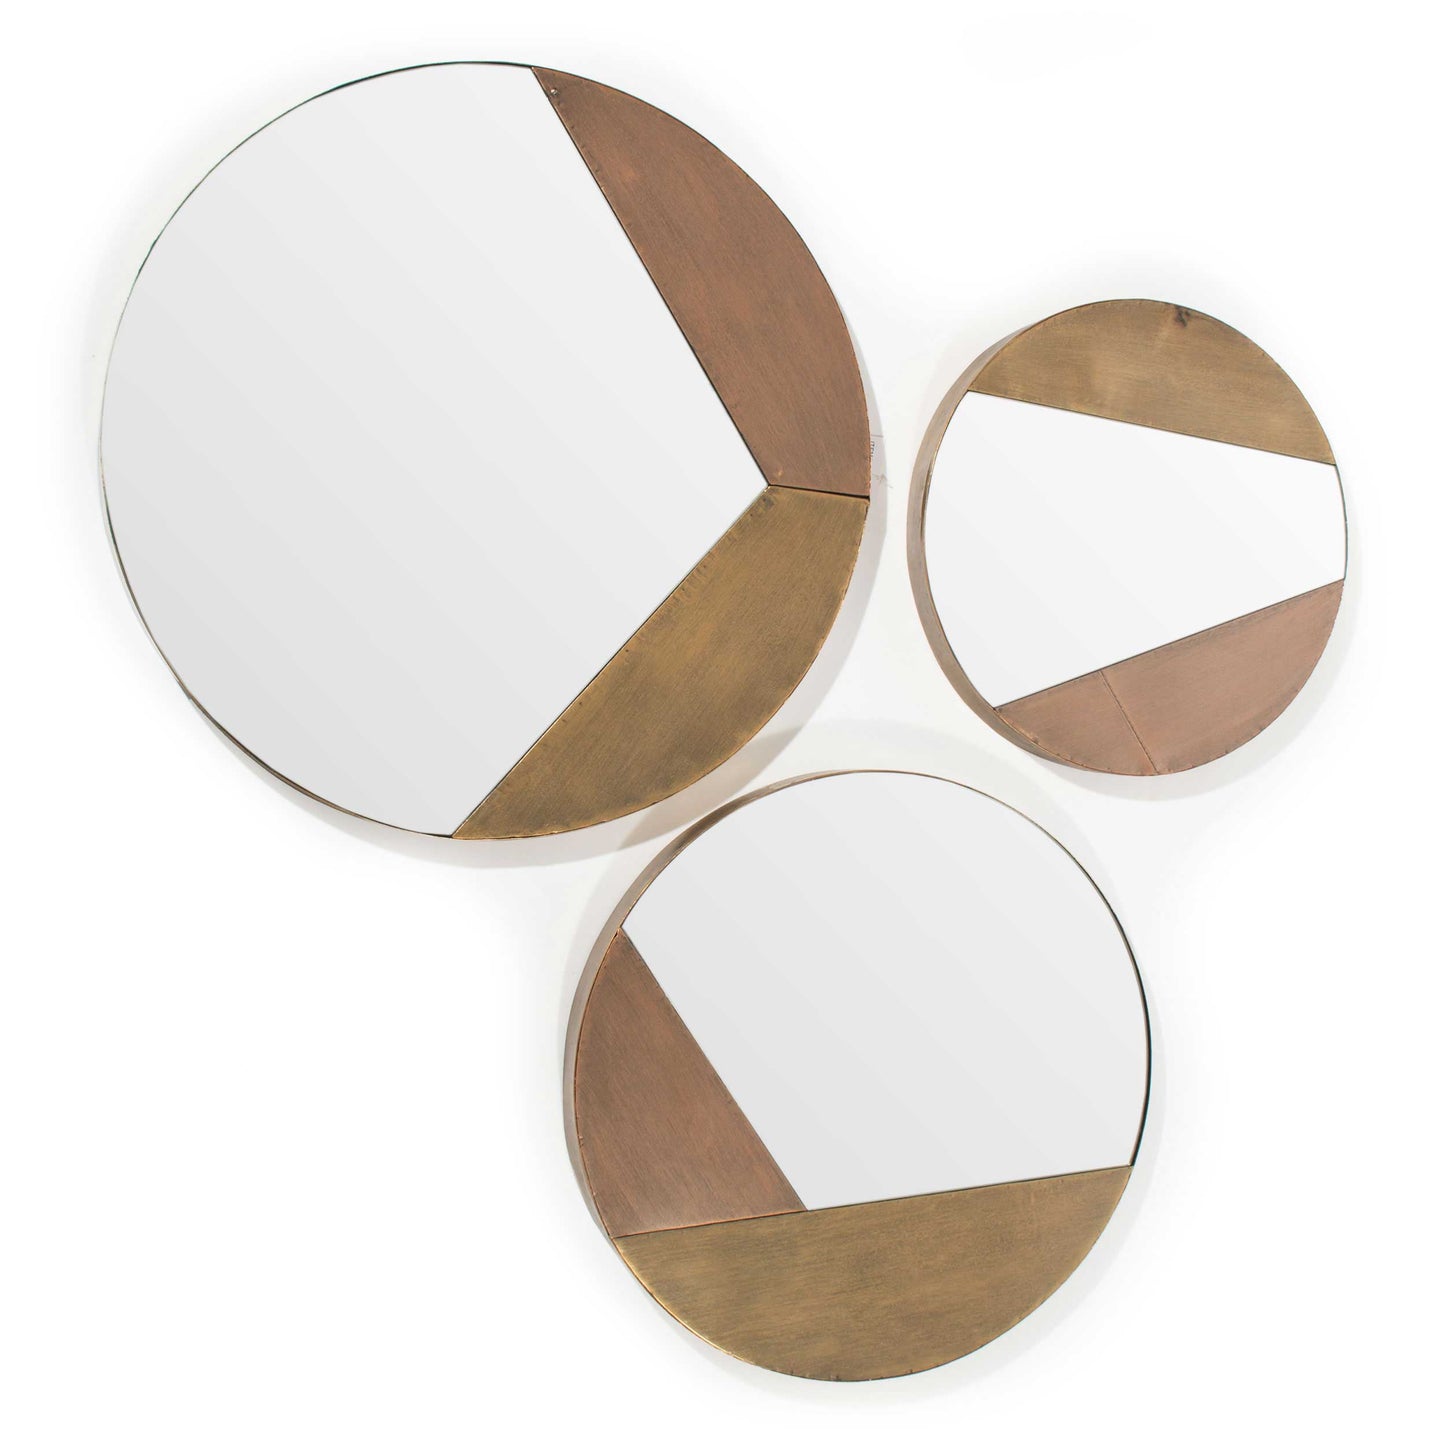 Maklin wall mirror set w/ gold frames in geometric designs